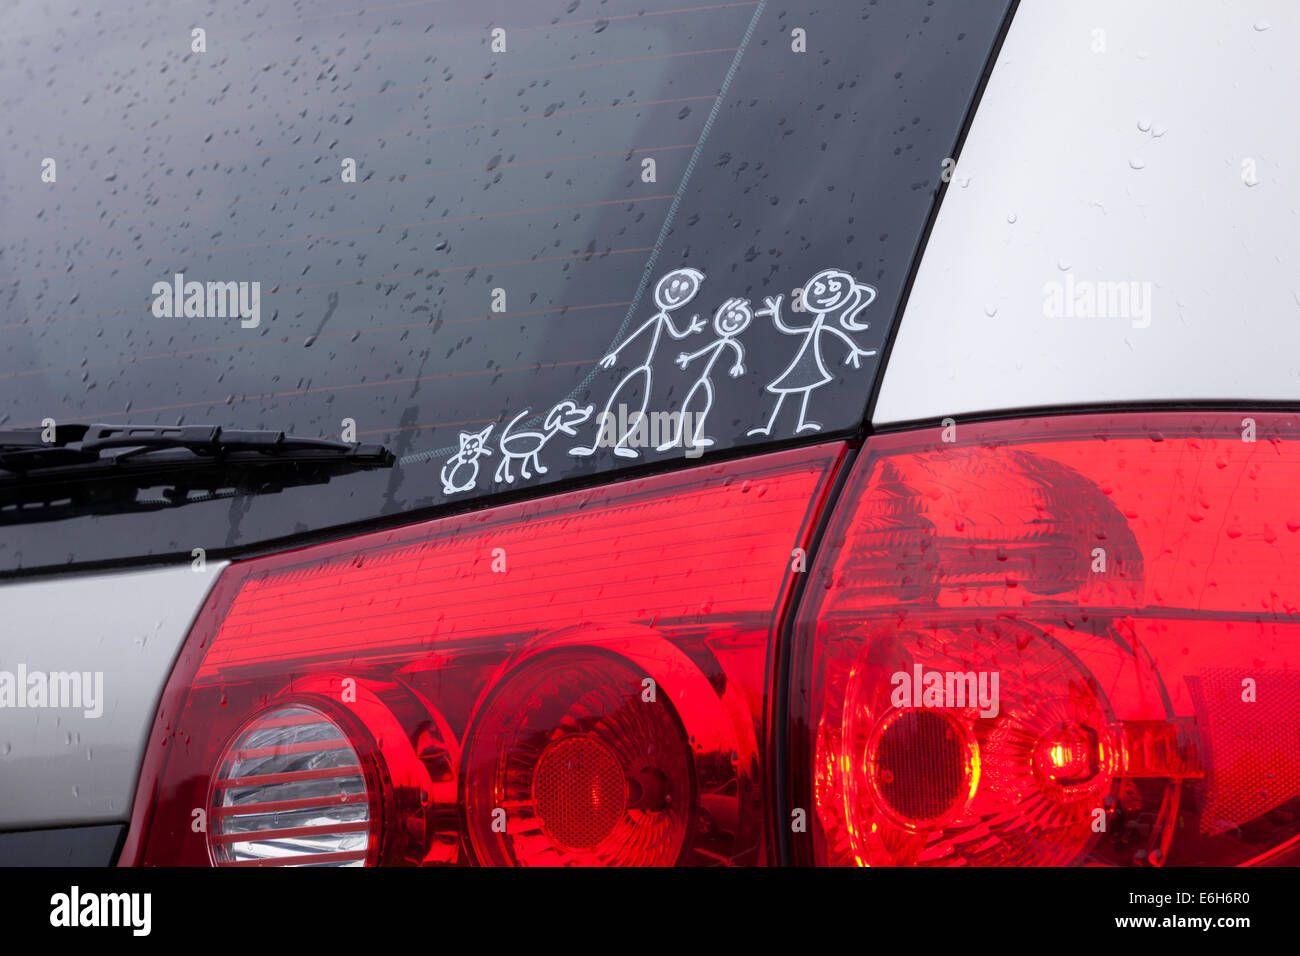 Family car stick figure sticker on minivan rear windshield - USA Stock Photo